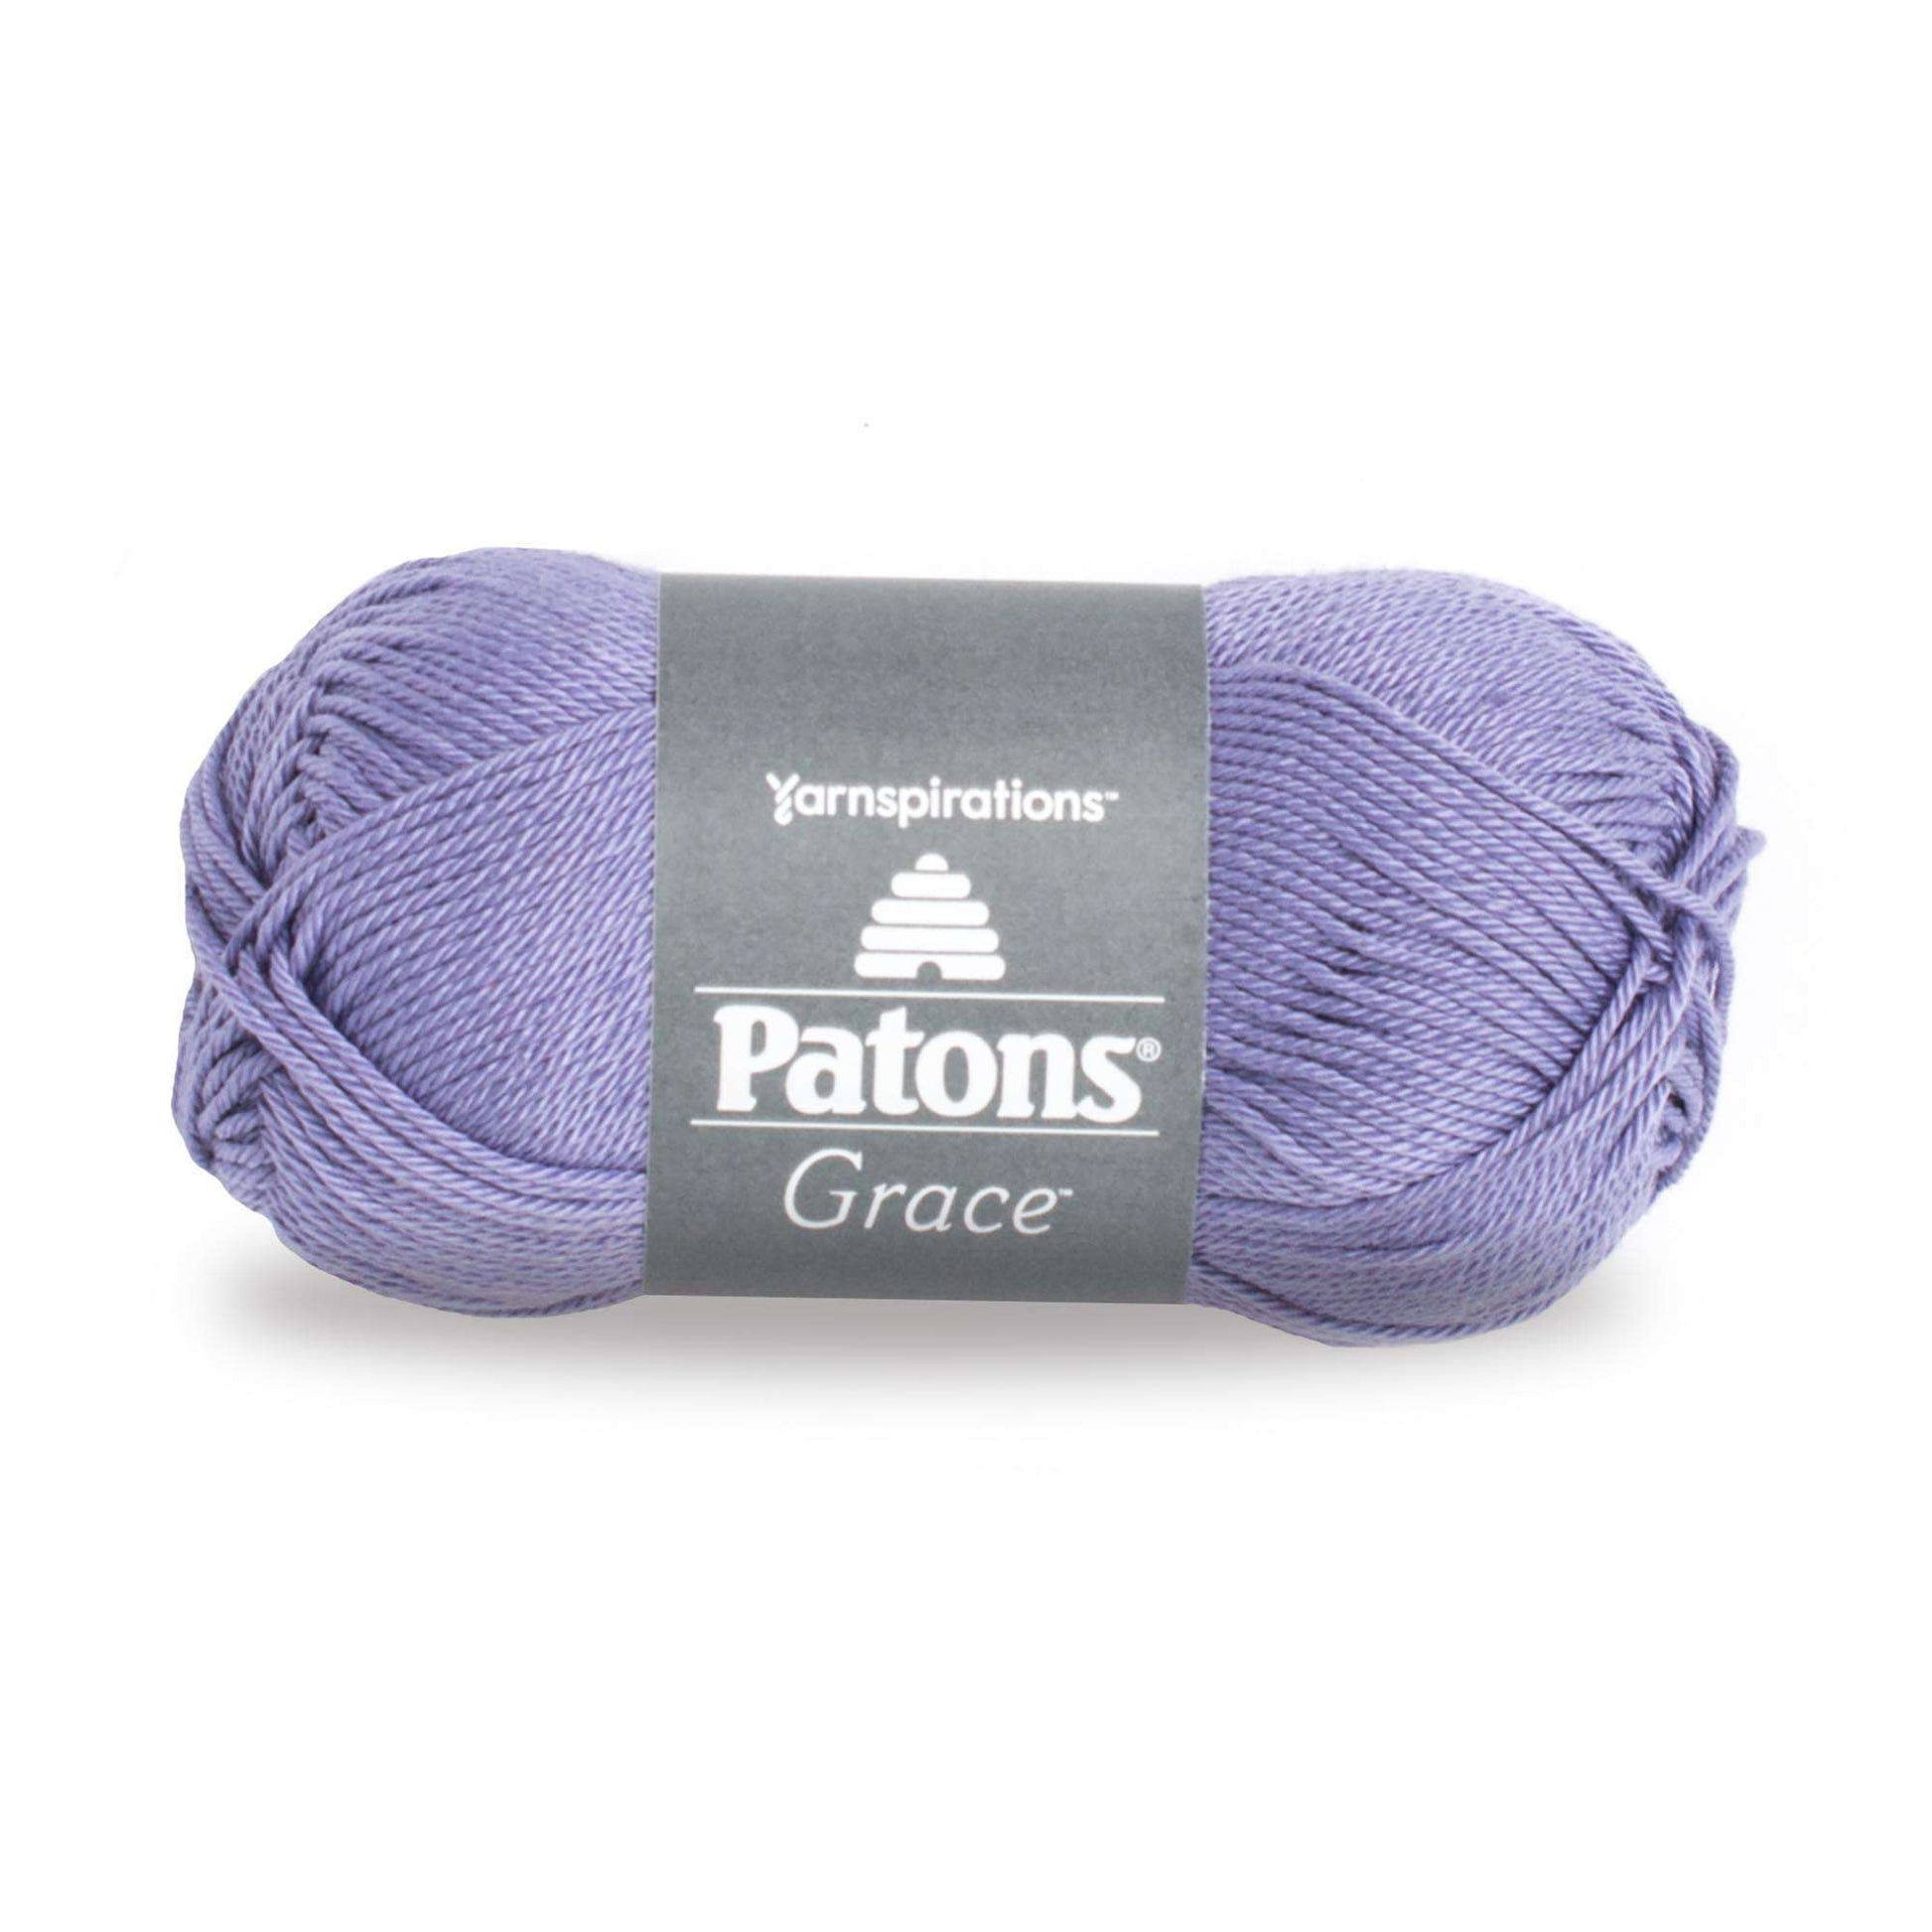 Patons Grace Yarn - Discontinued Shades